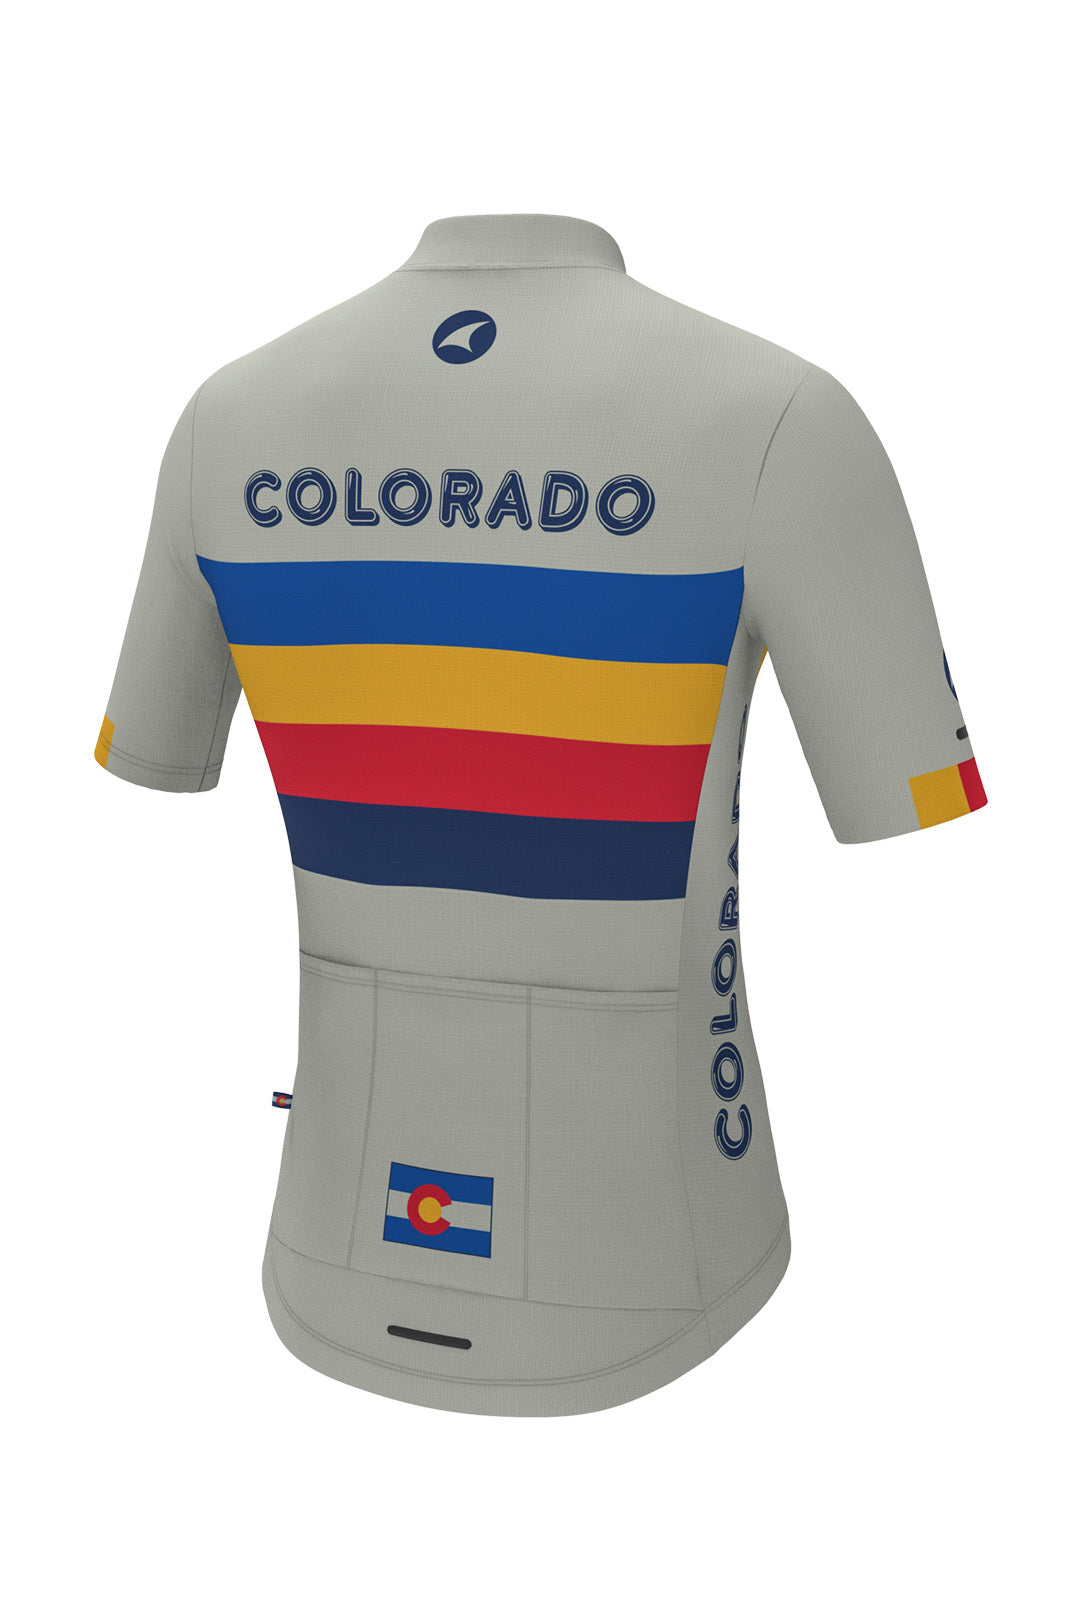 Men's Retro White Colorado Cycling Jersey - Ascent Aero Back View